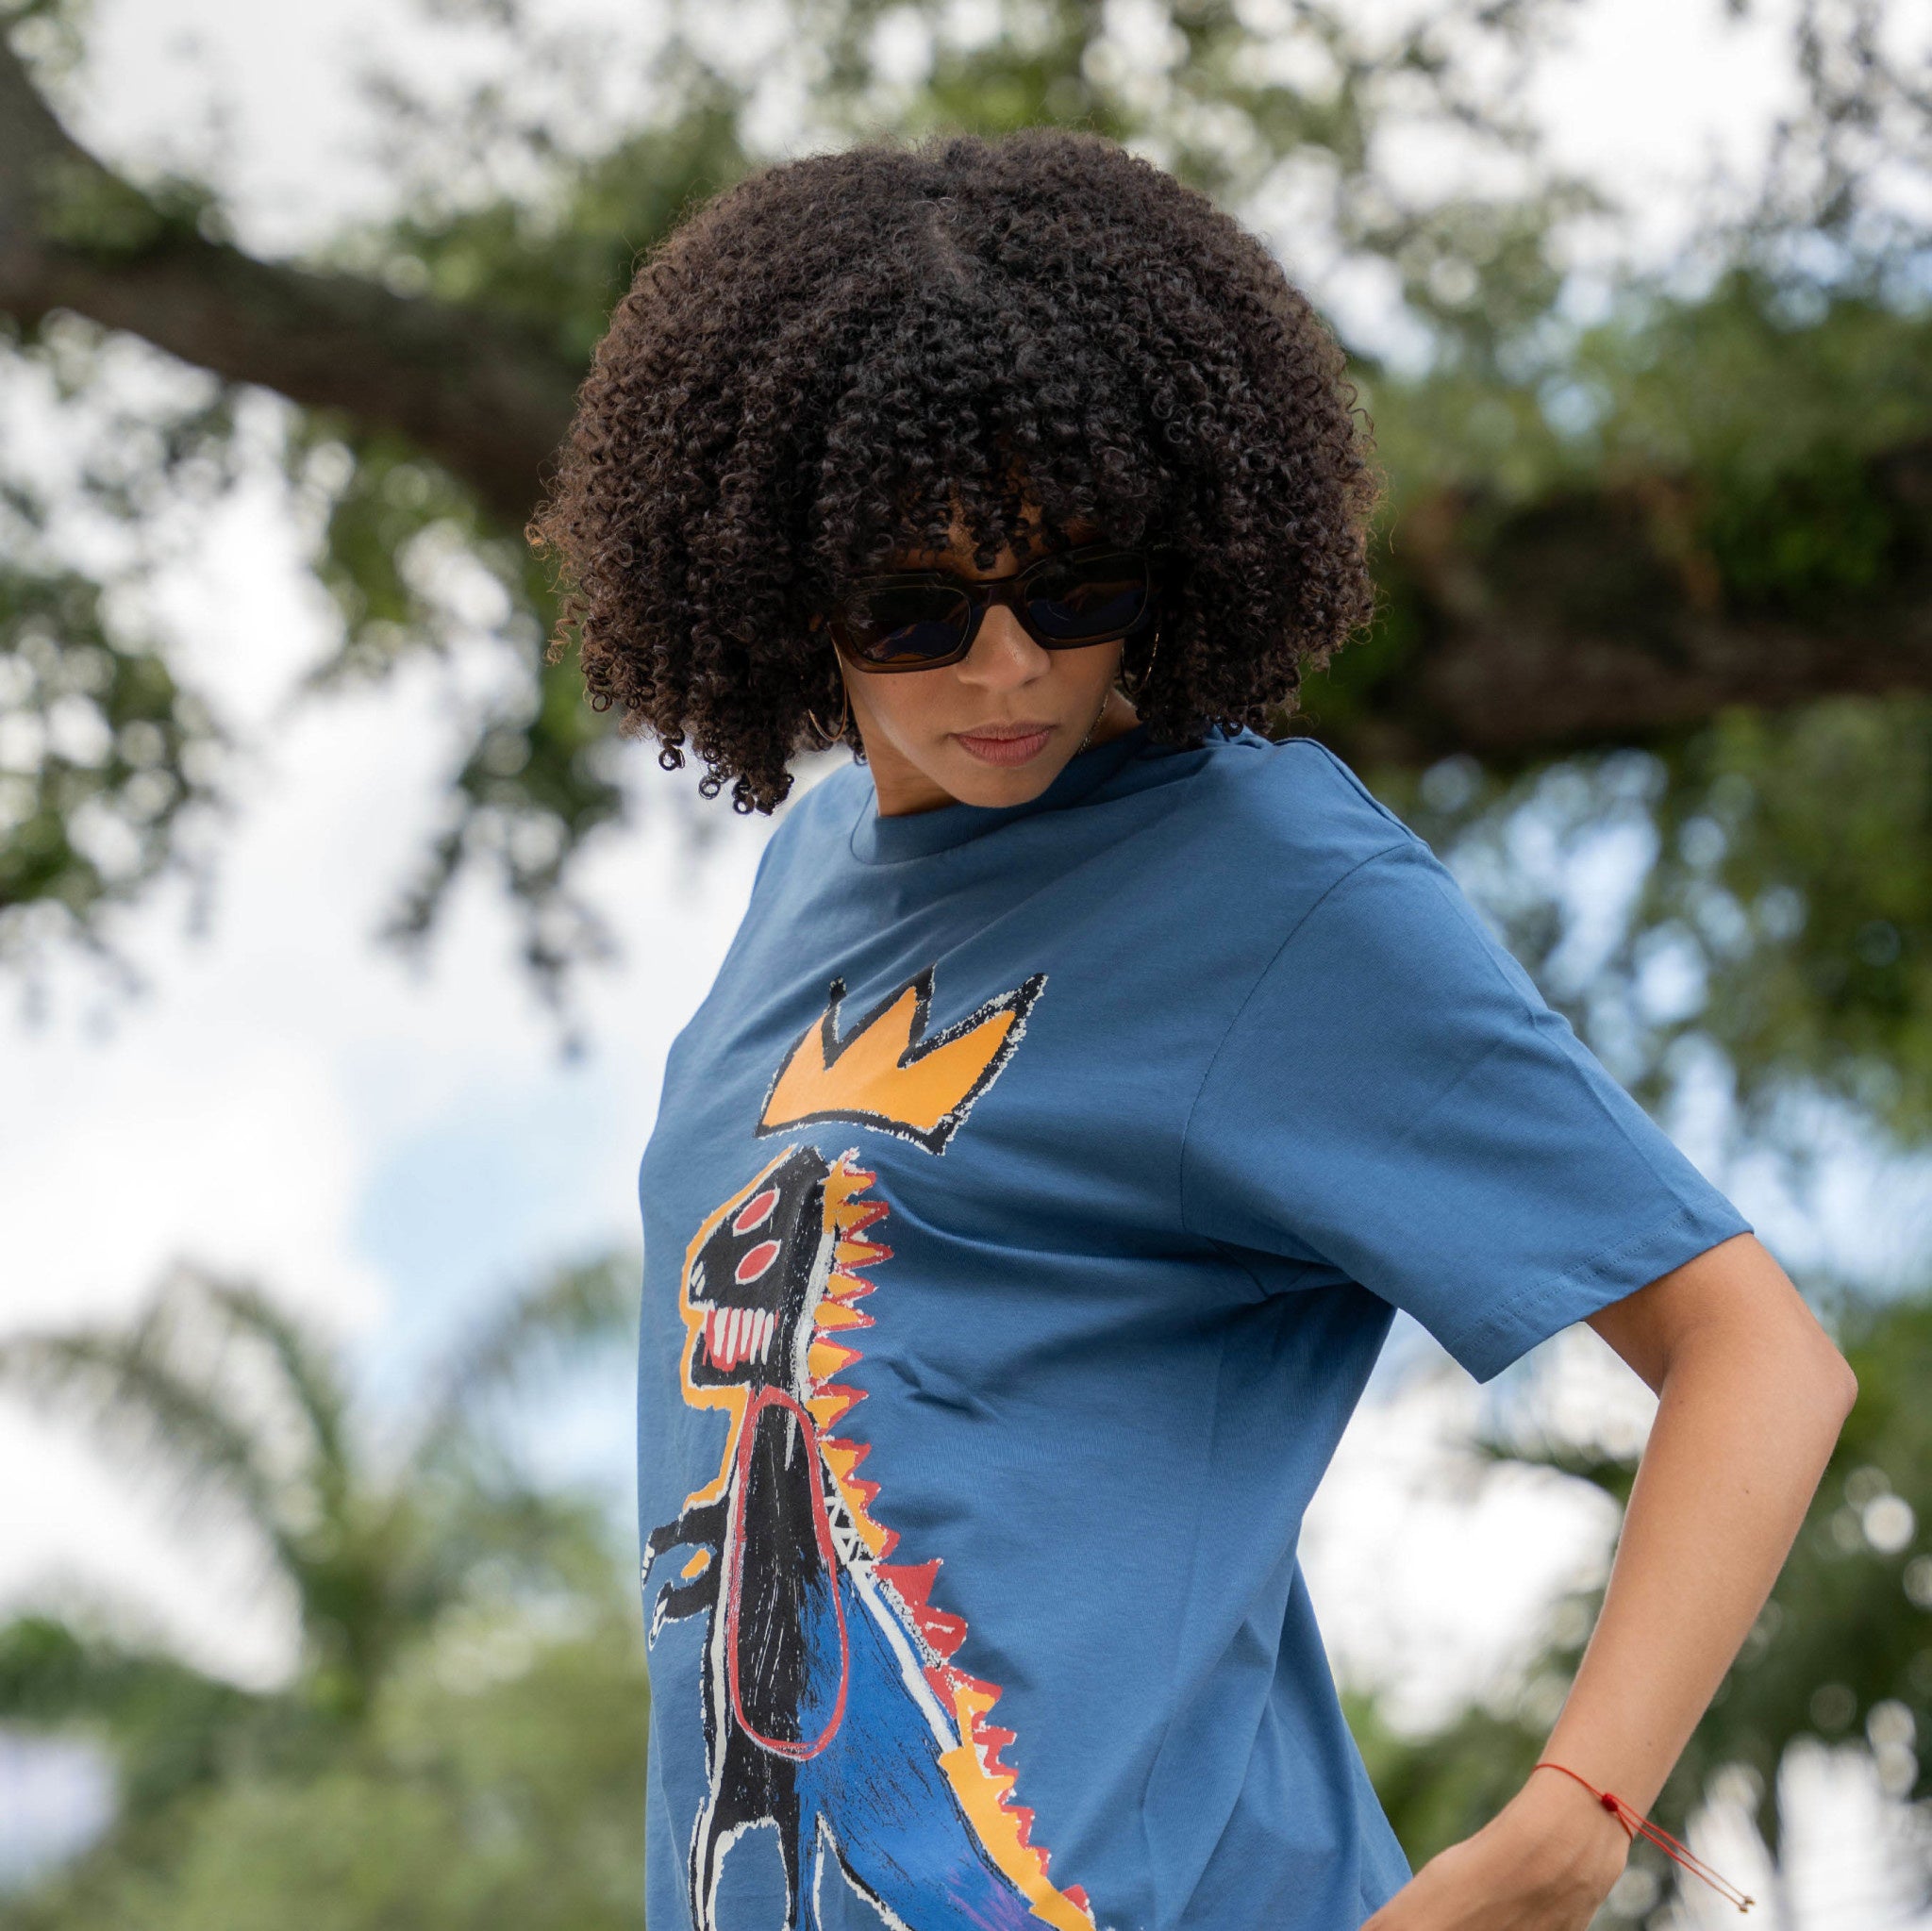 Basquiat PEZ DISPENSER T-Shirt Blue - Wynwood Walls Shop